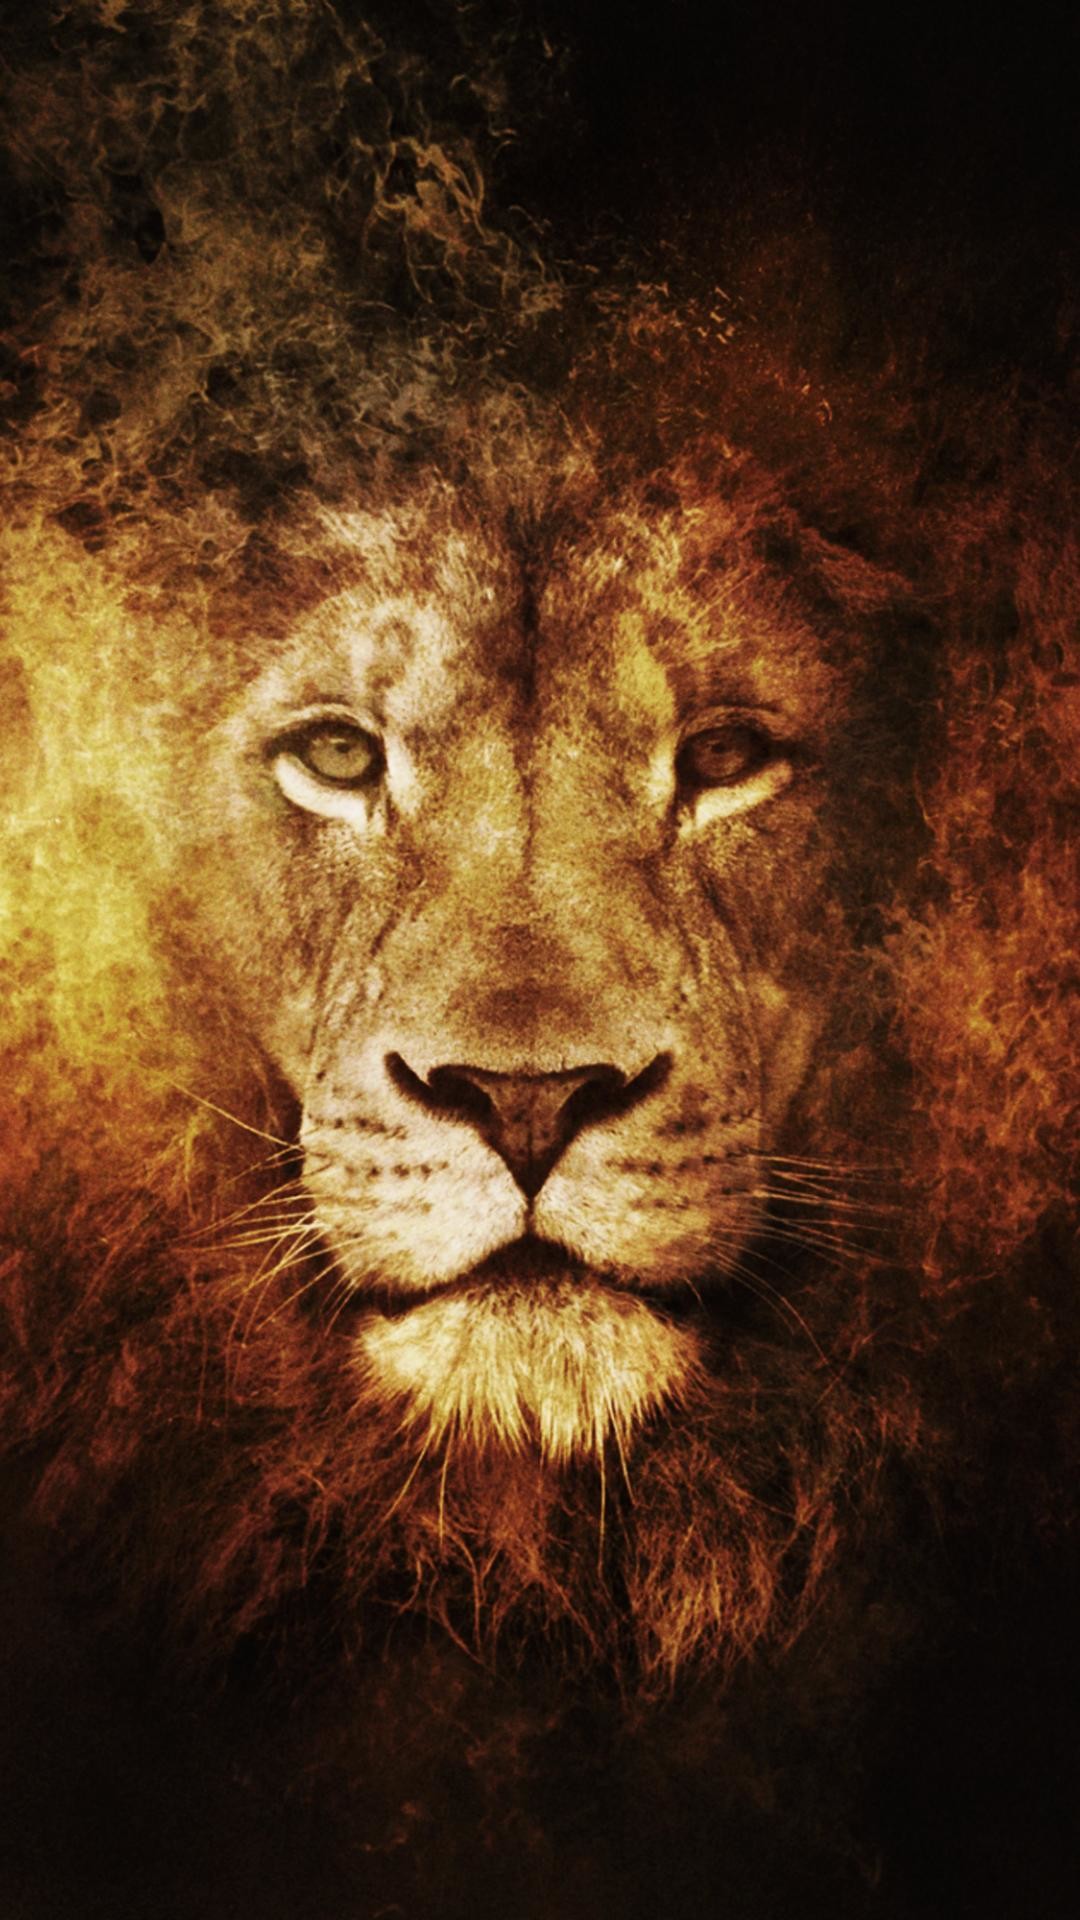 1080x1920 Lion Wallpaper Hd Animals Lion Iphone 6 Plus Wallpaper